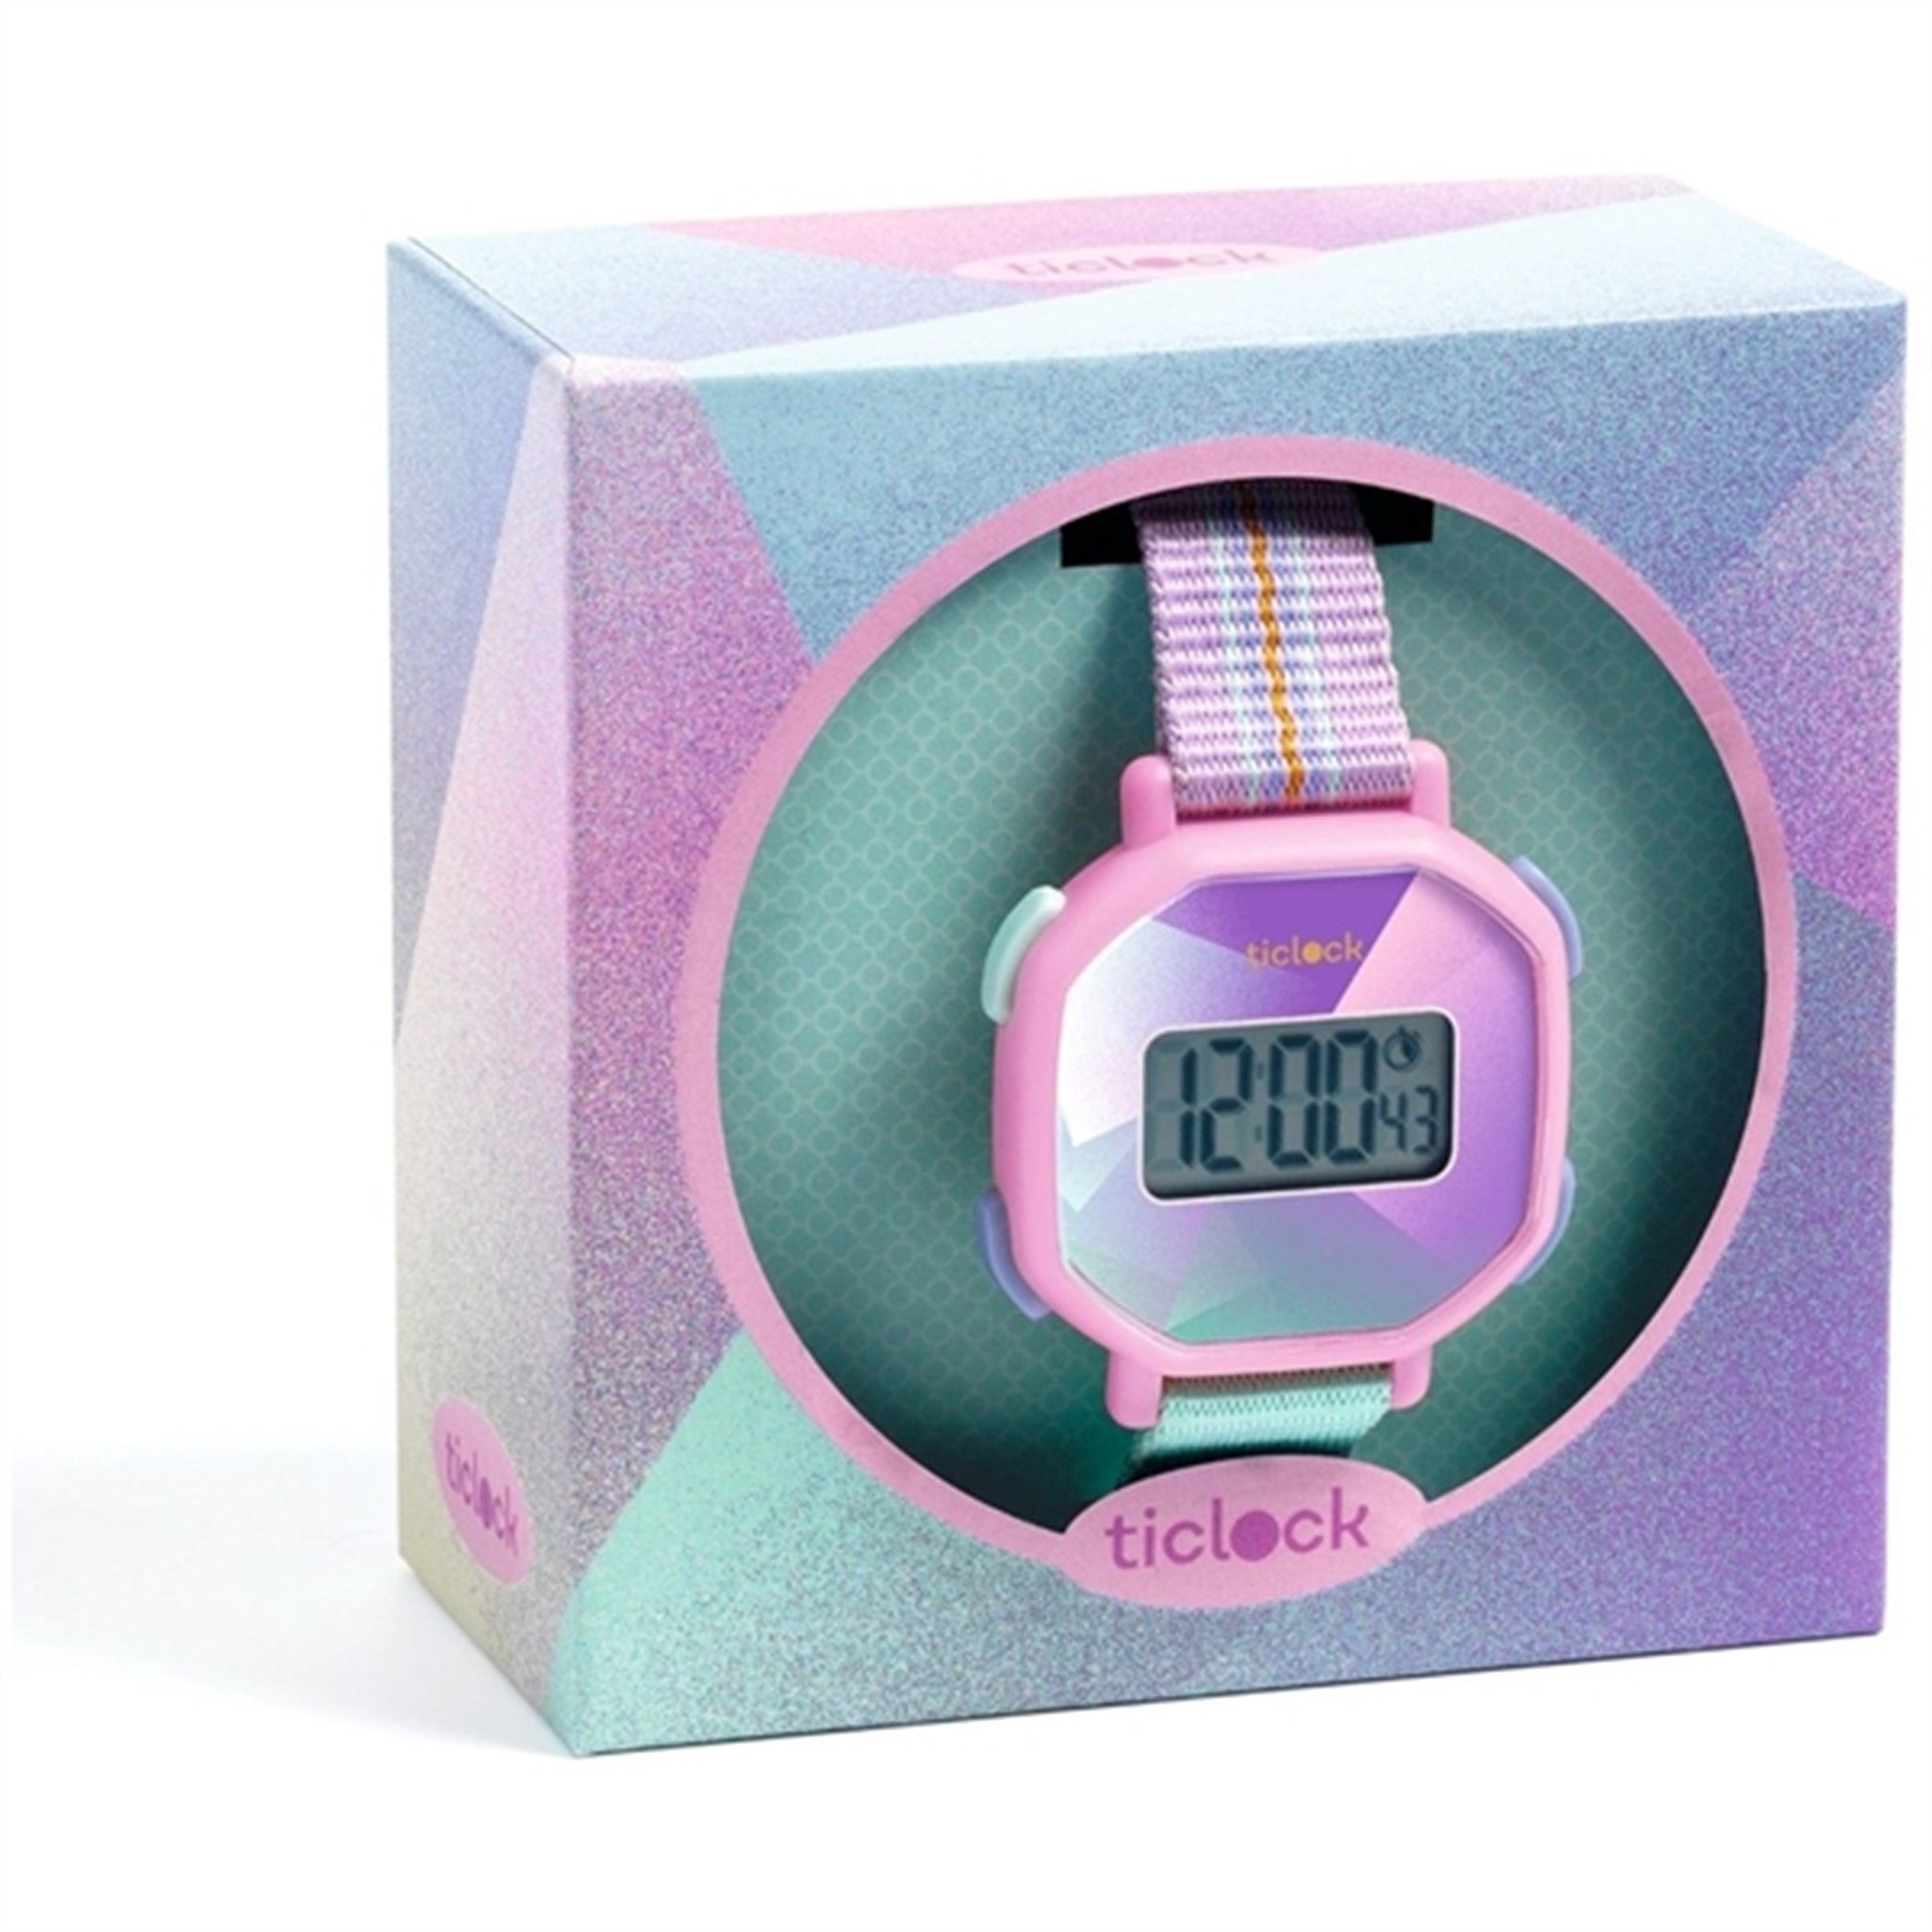 Djeco Ticlock Digital Watch Purple Prisma 4